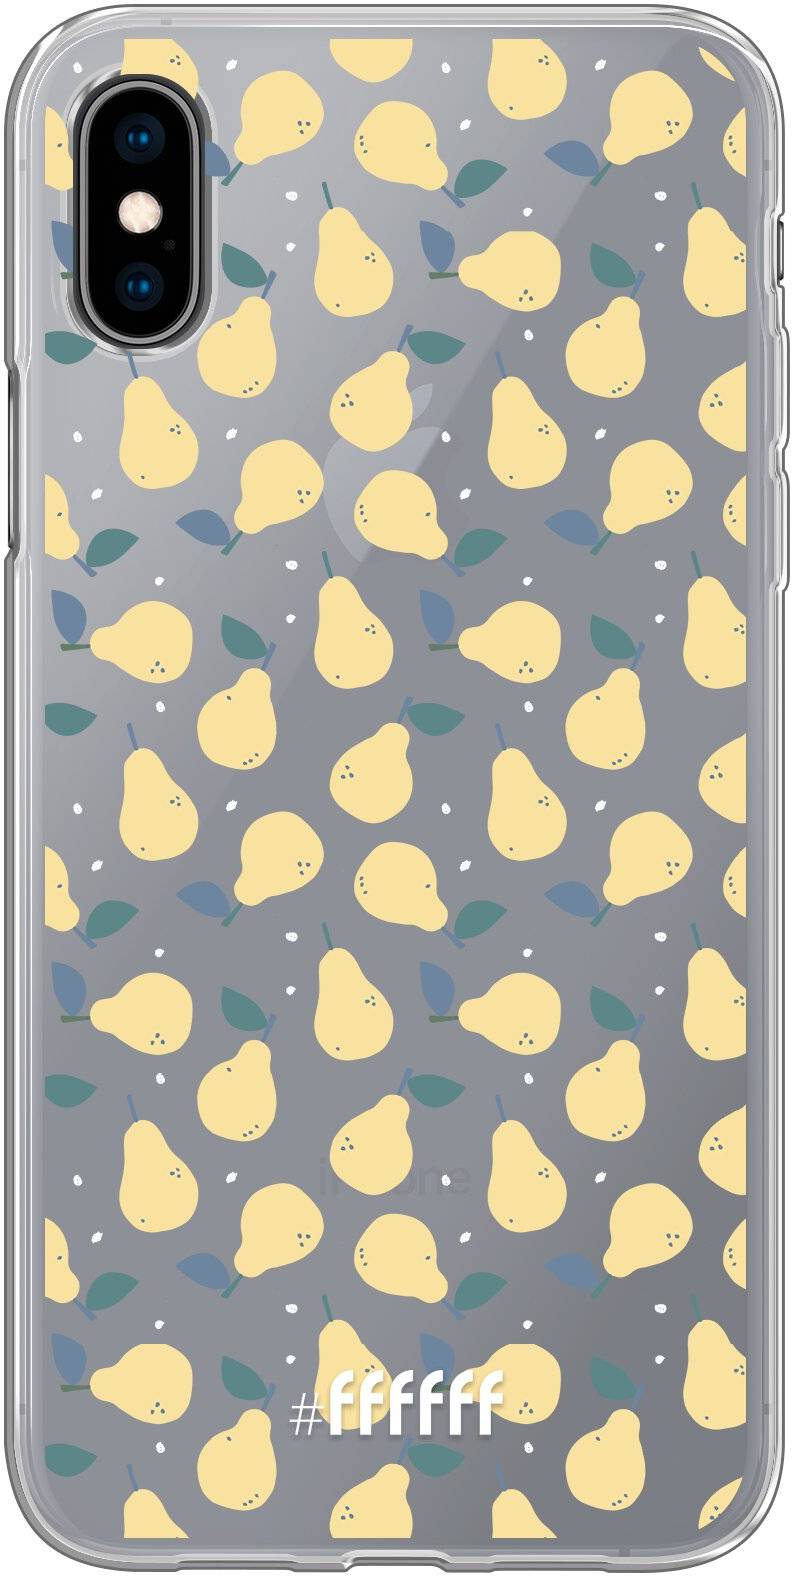 Pears iPhone X